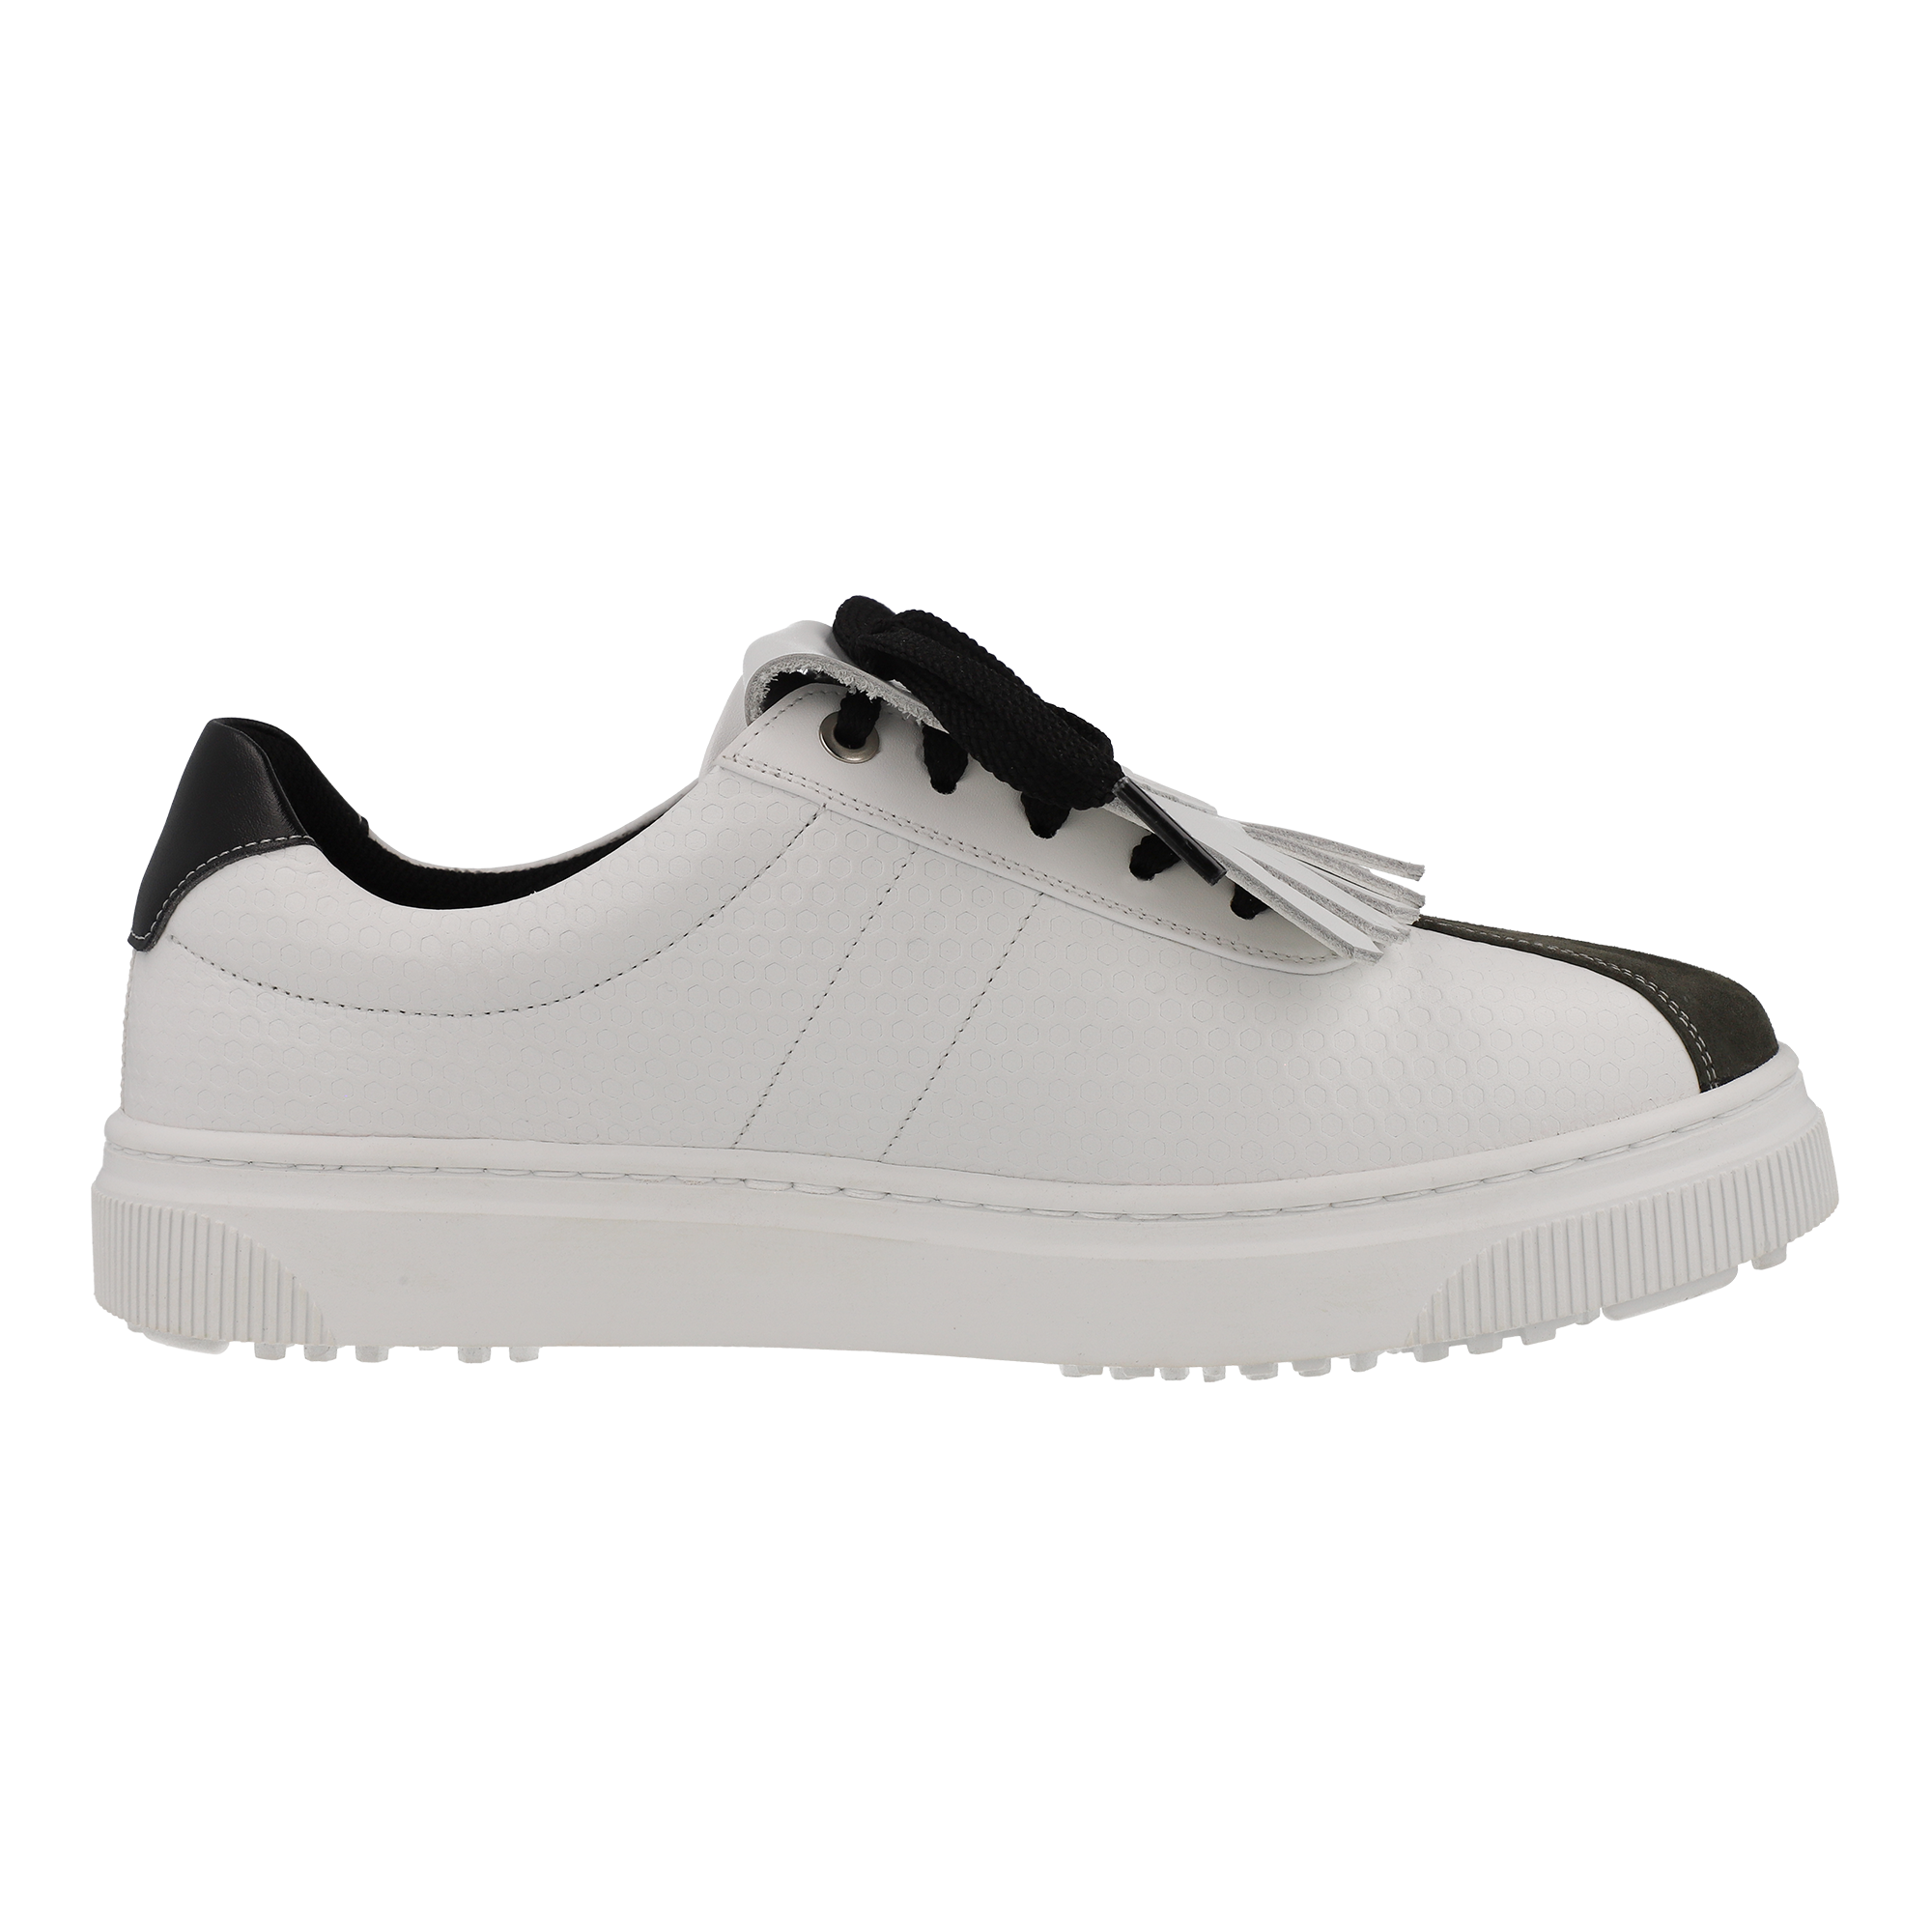 FITTEREST Honeycomb Ground Golf Shoes for Women - FTR24 W407